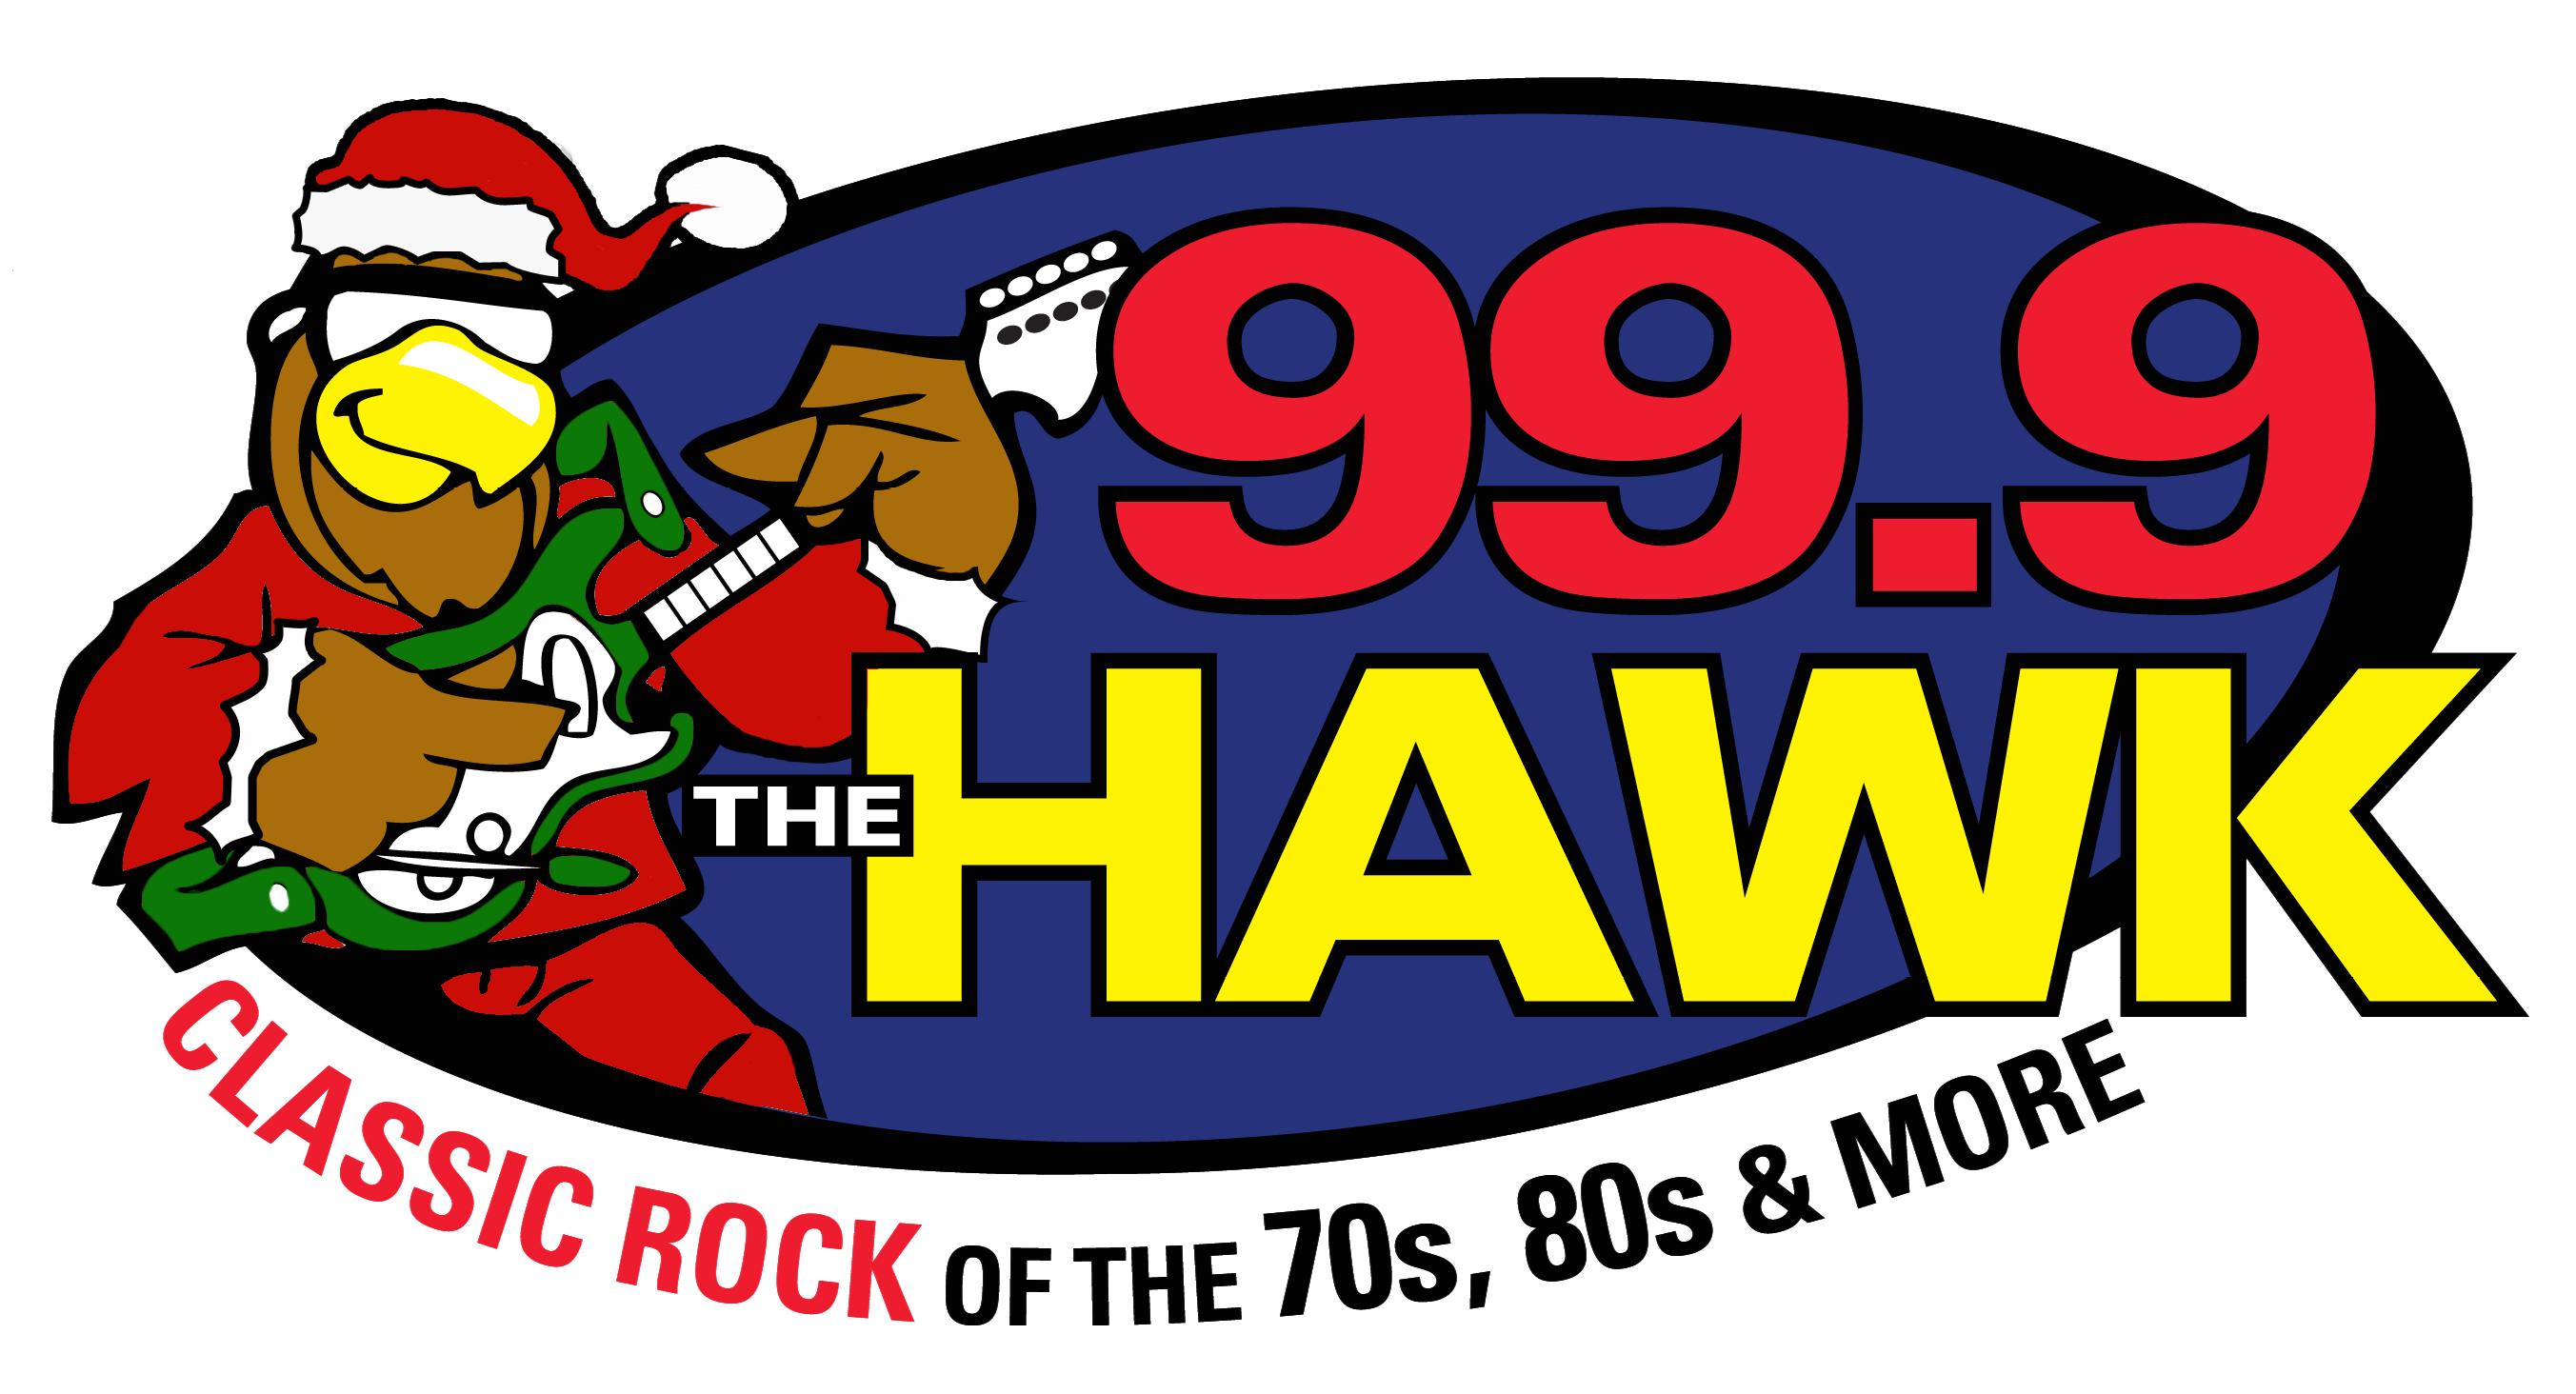 99.9 The Hawk logo